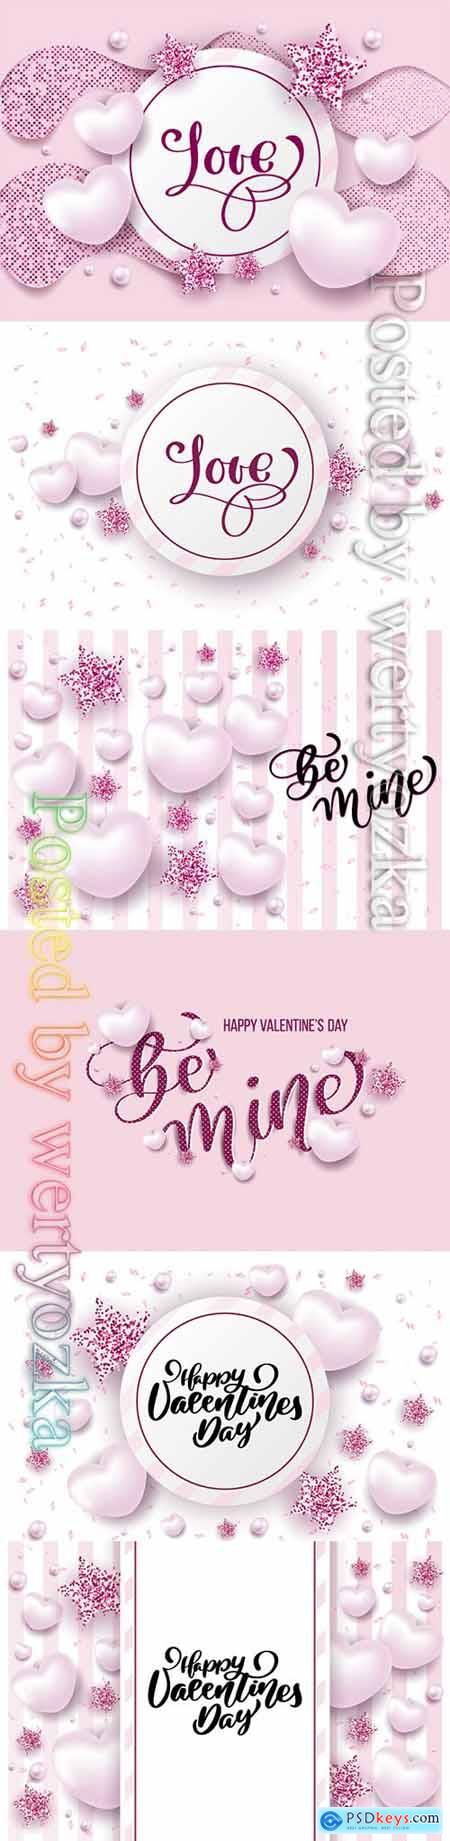 Happy valentine day festive sparkle layout template design